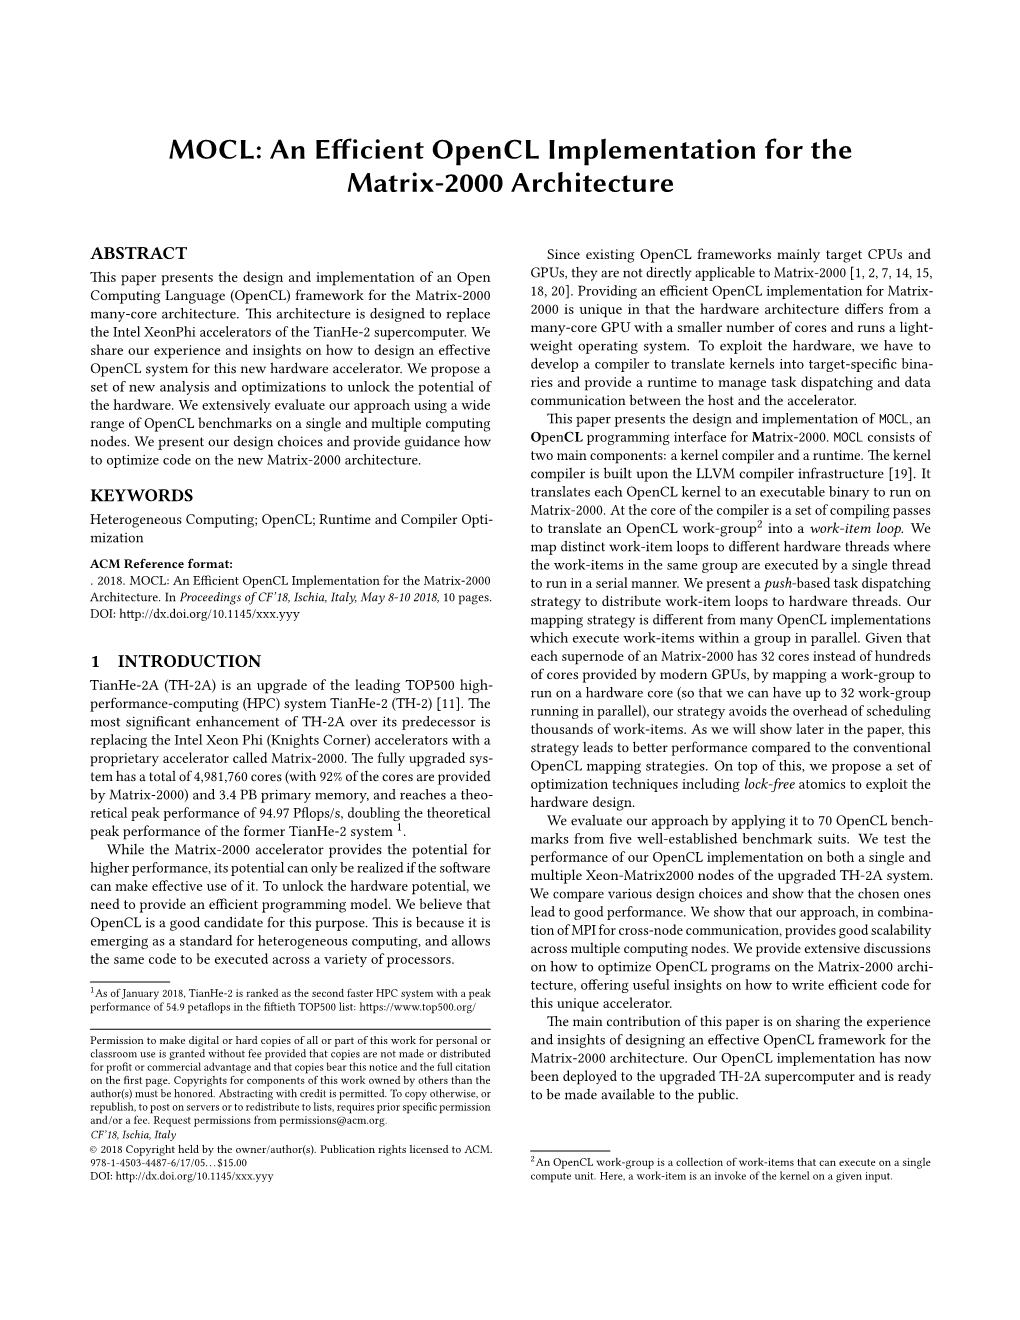 MOCL: an Efficient Opencl Implementation for the Matrix-2000